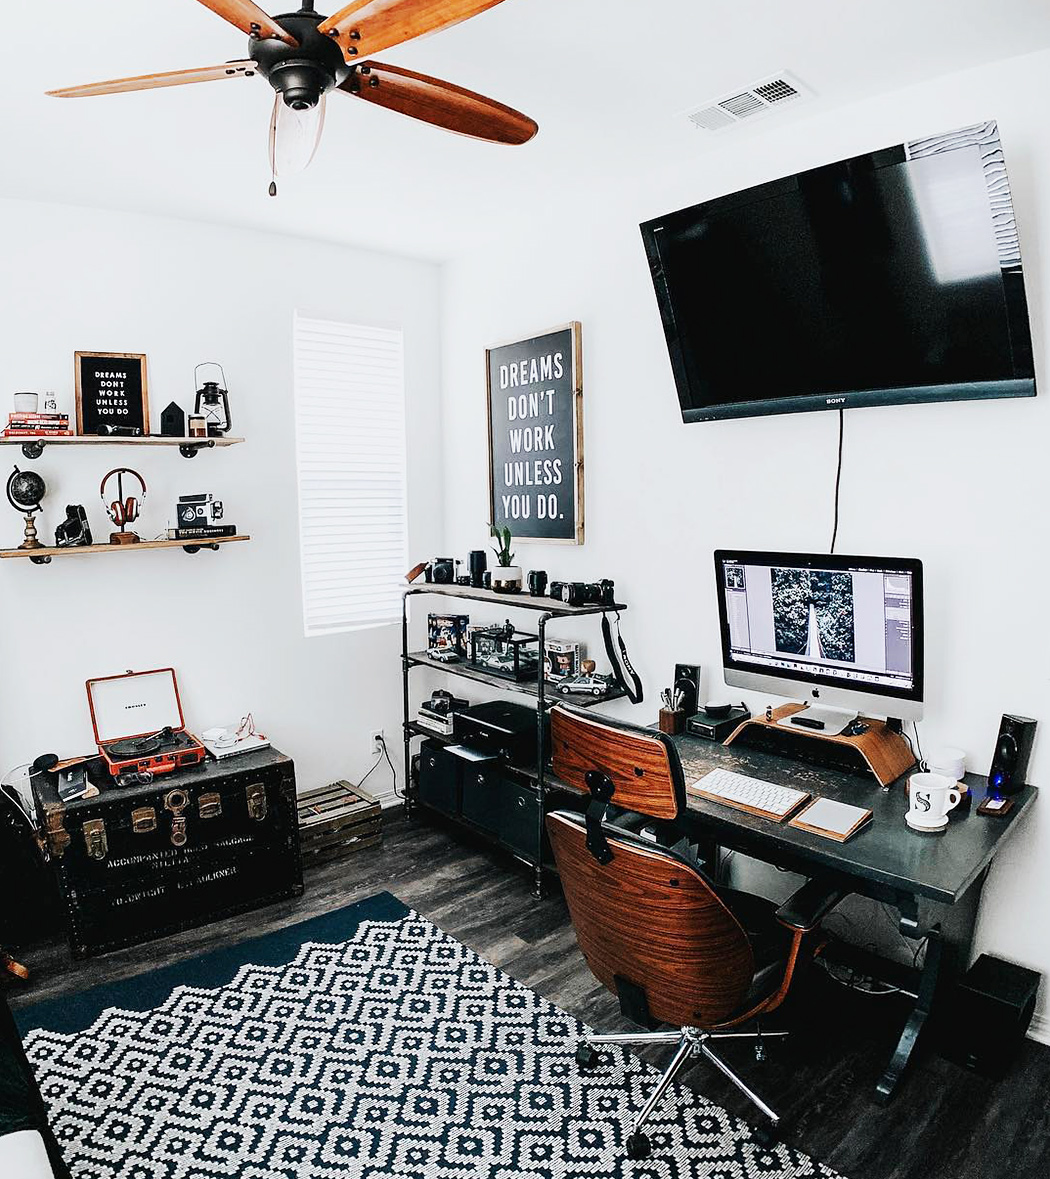 https://www.yankodesign.com/images/design_news/2019/07/desk-setups-that-maximize-productivity-part-2/Desk-Setup_03.jpg